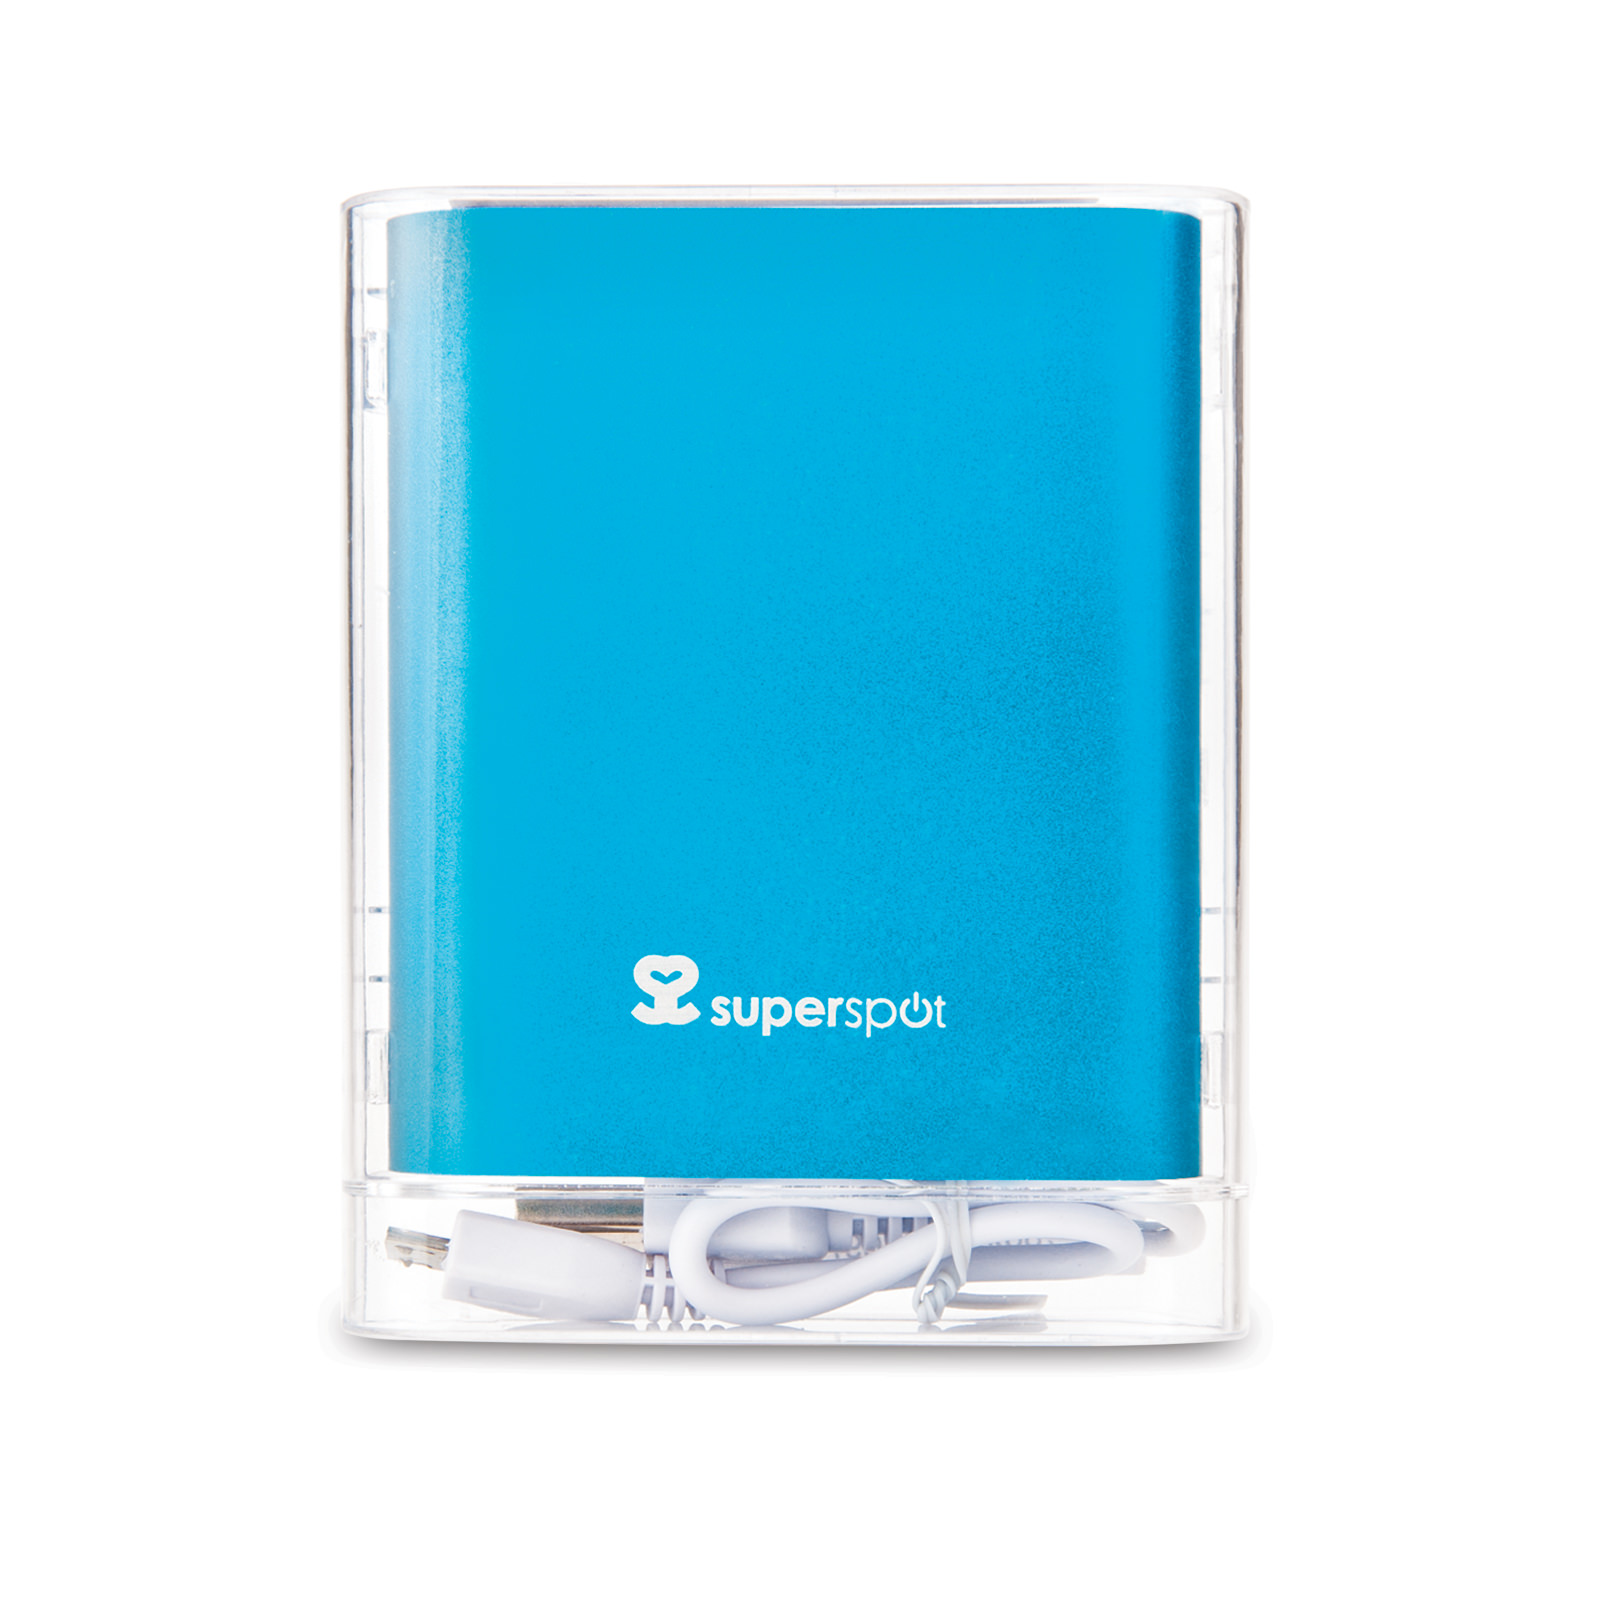 SuperSpot 10400 mAh Powerbank - Blue